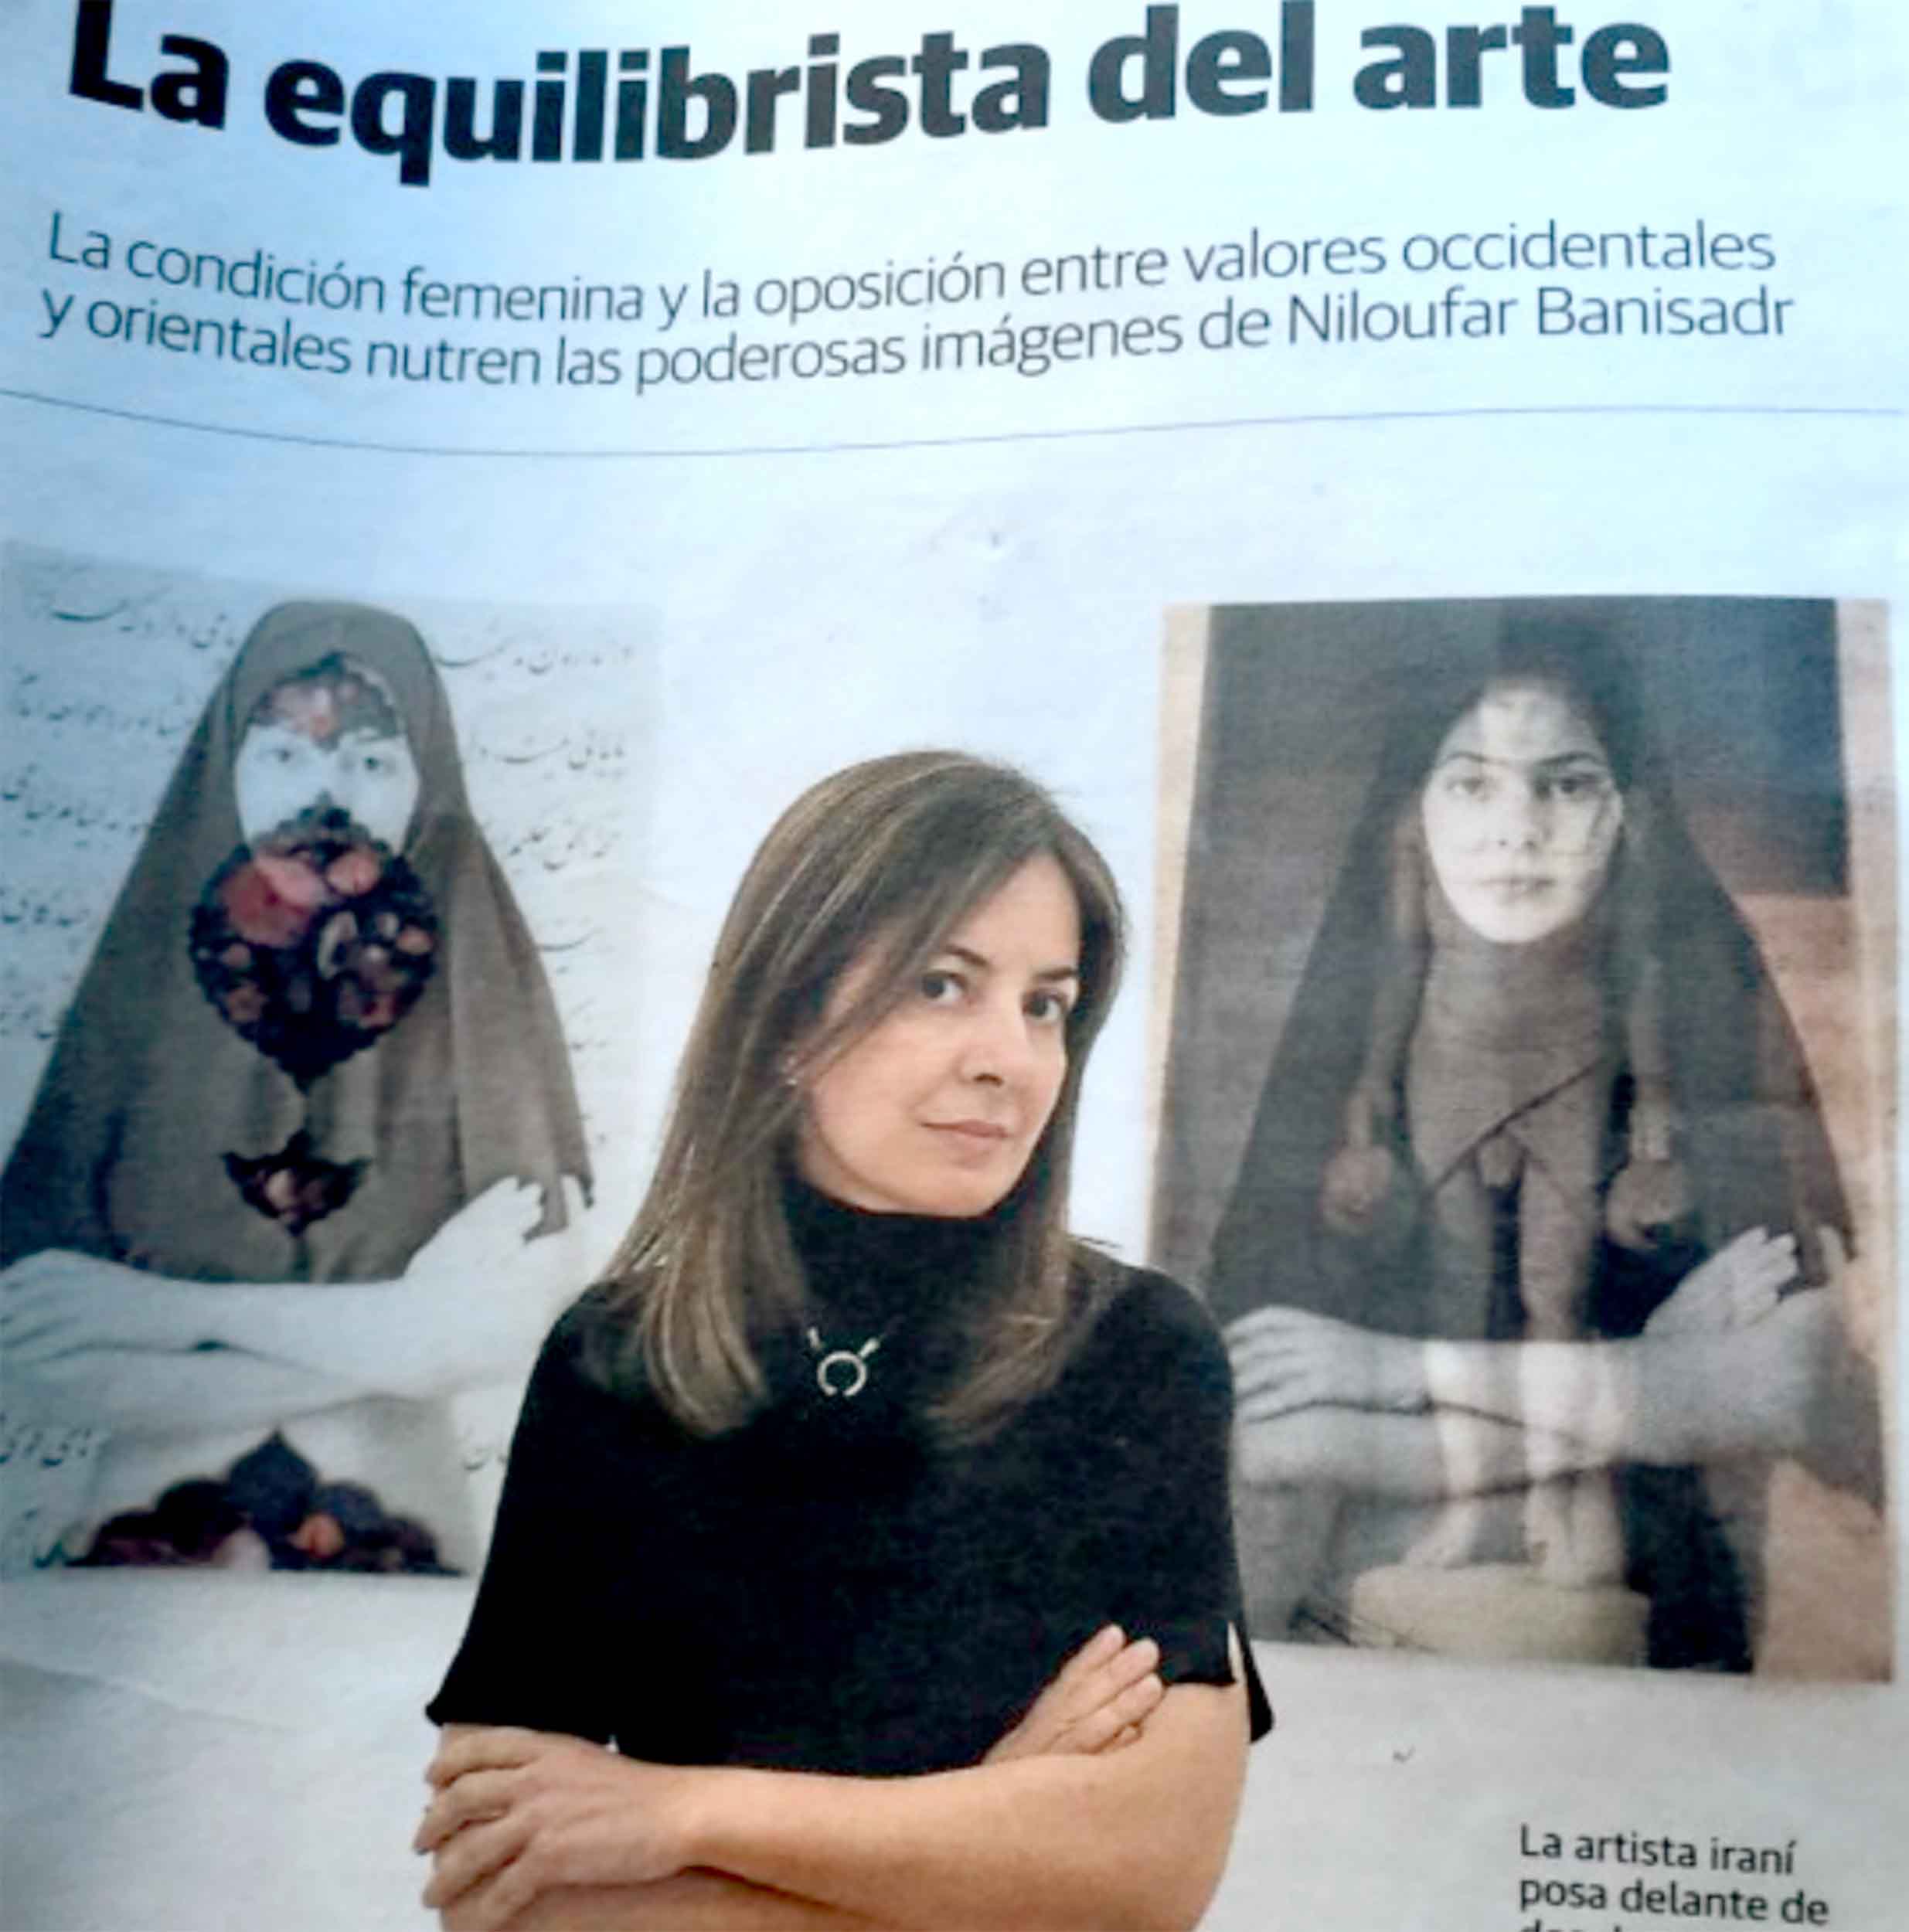 Niloufar Banisadr press article on El Correo